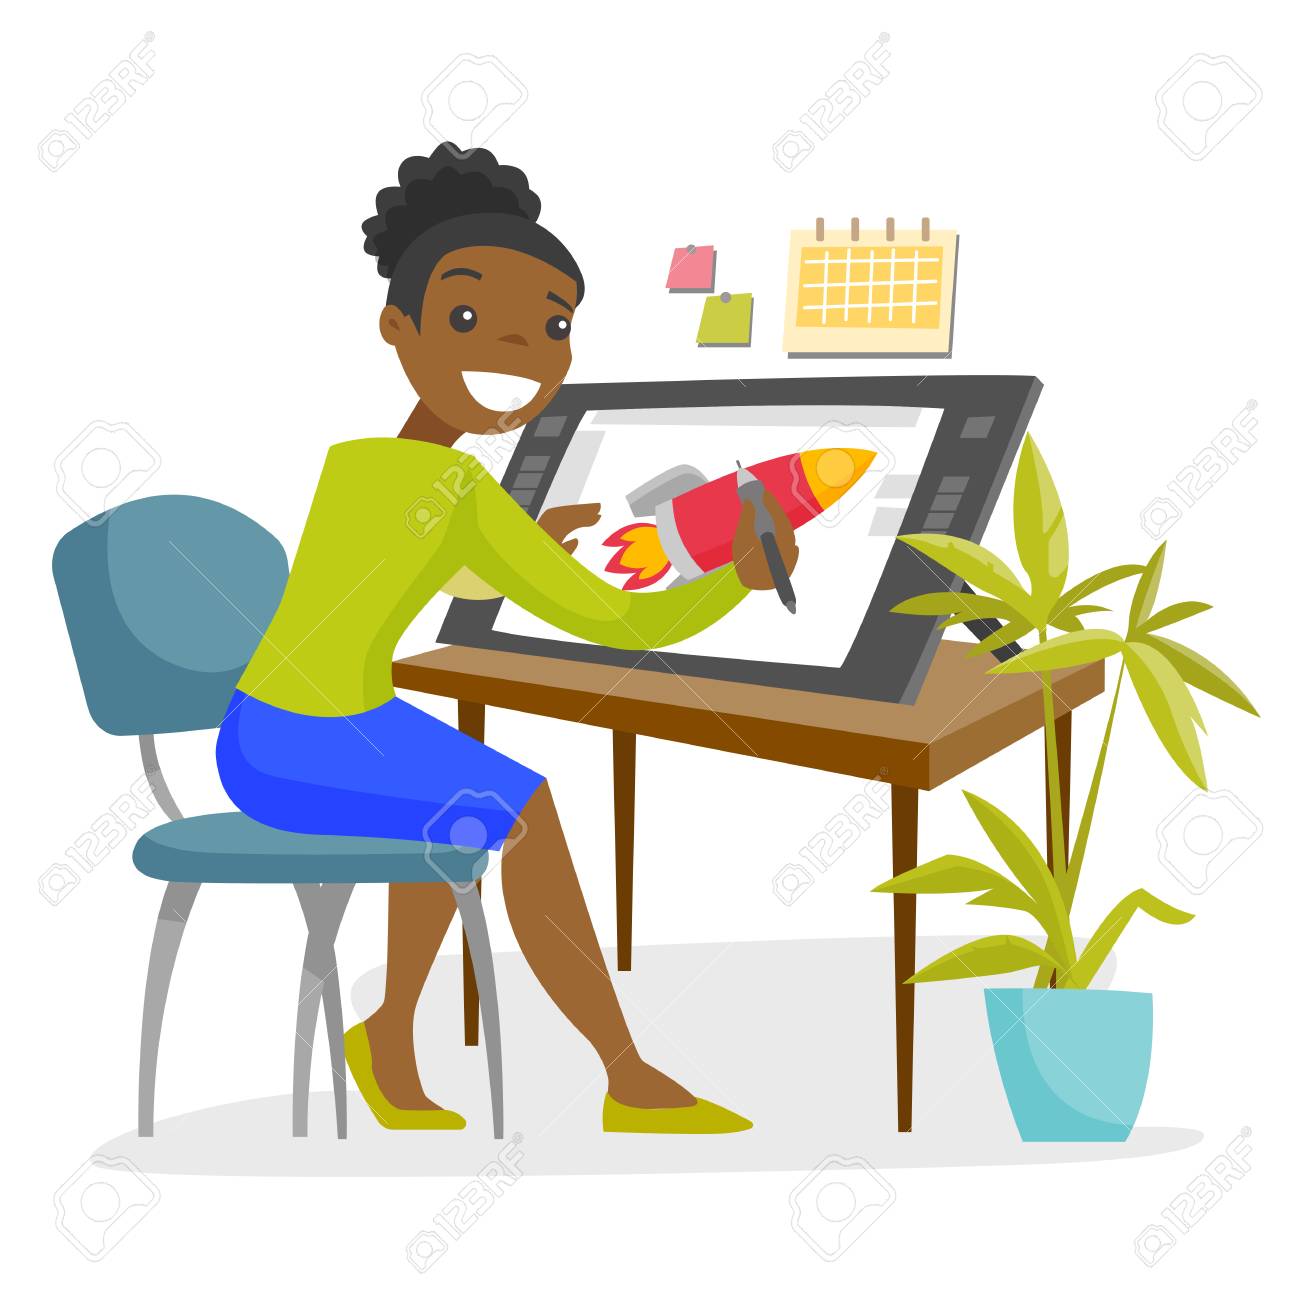 A black woman graphic designer or freelance artist works using...